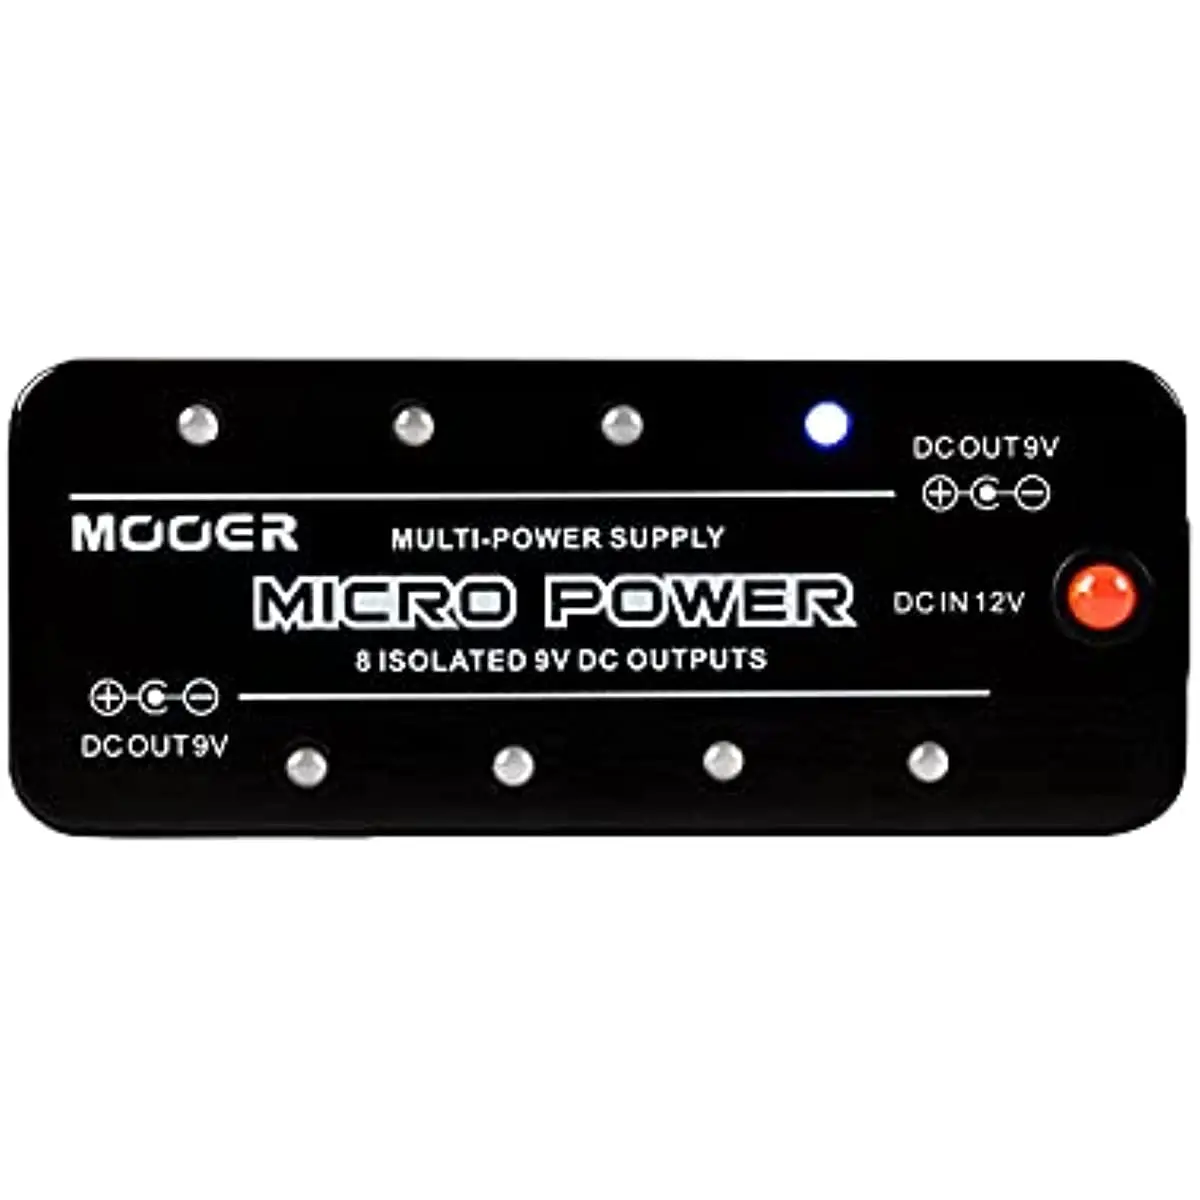 Эффект микро. Mooer Micro Power. Блок питания mooer macro Power s12. Mooer Micro Power s8. Mooer Power Supply Micro.